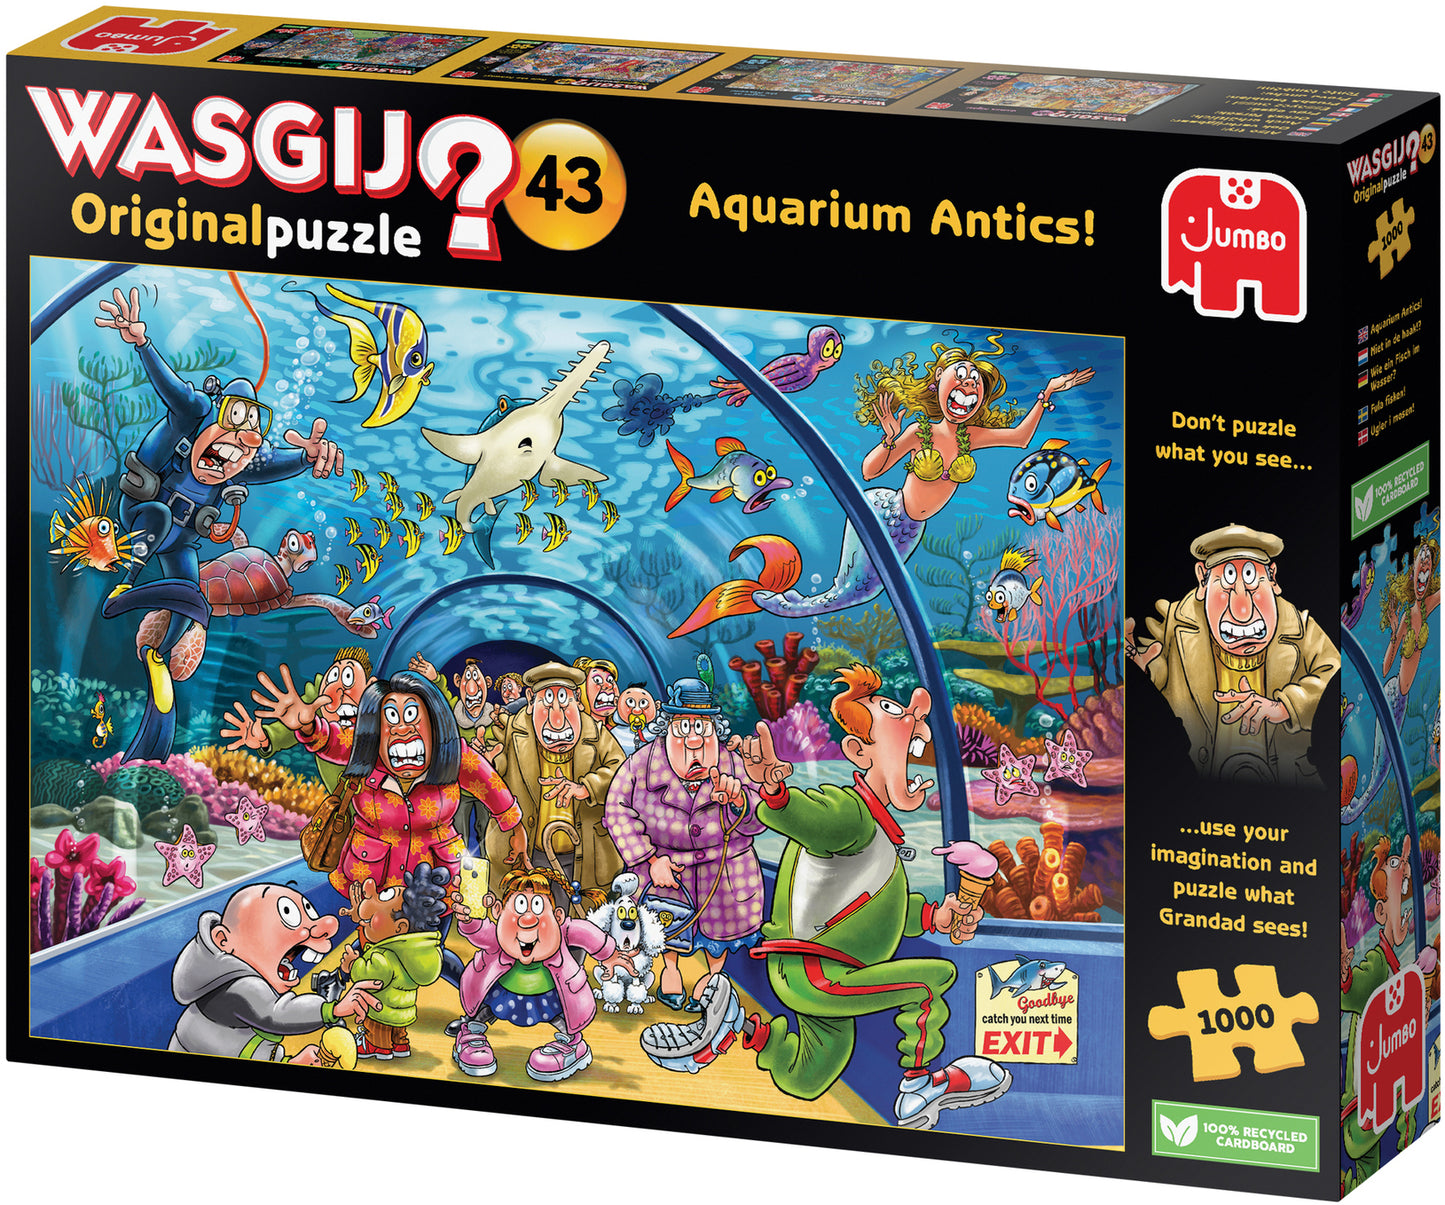 Wasgij - Original 43 - Aquarium Antics - 1000 Piece Jigsaw Puzzle